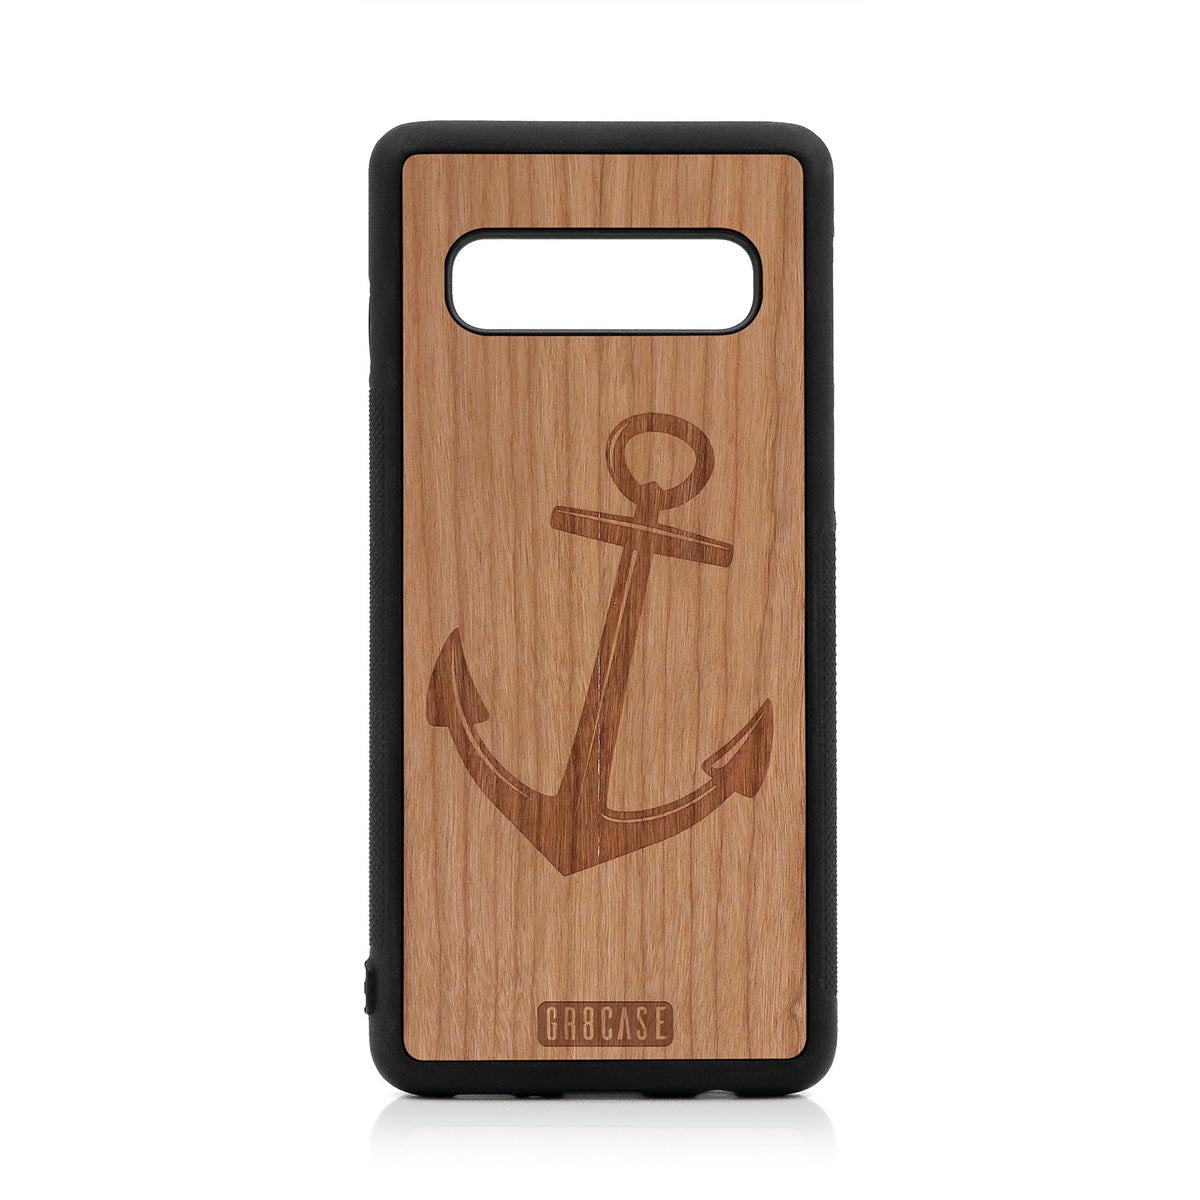 Anchor Design Wood Case For Samsung Galaxy S10E by GR8CASE